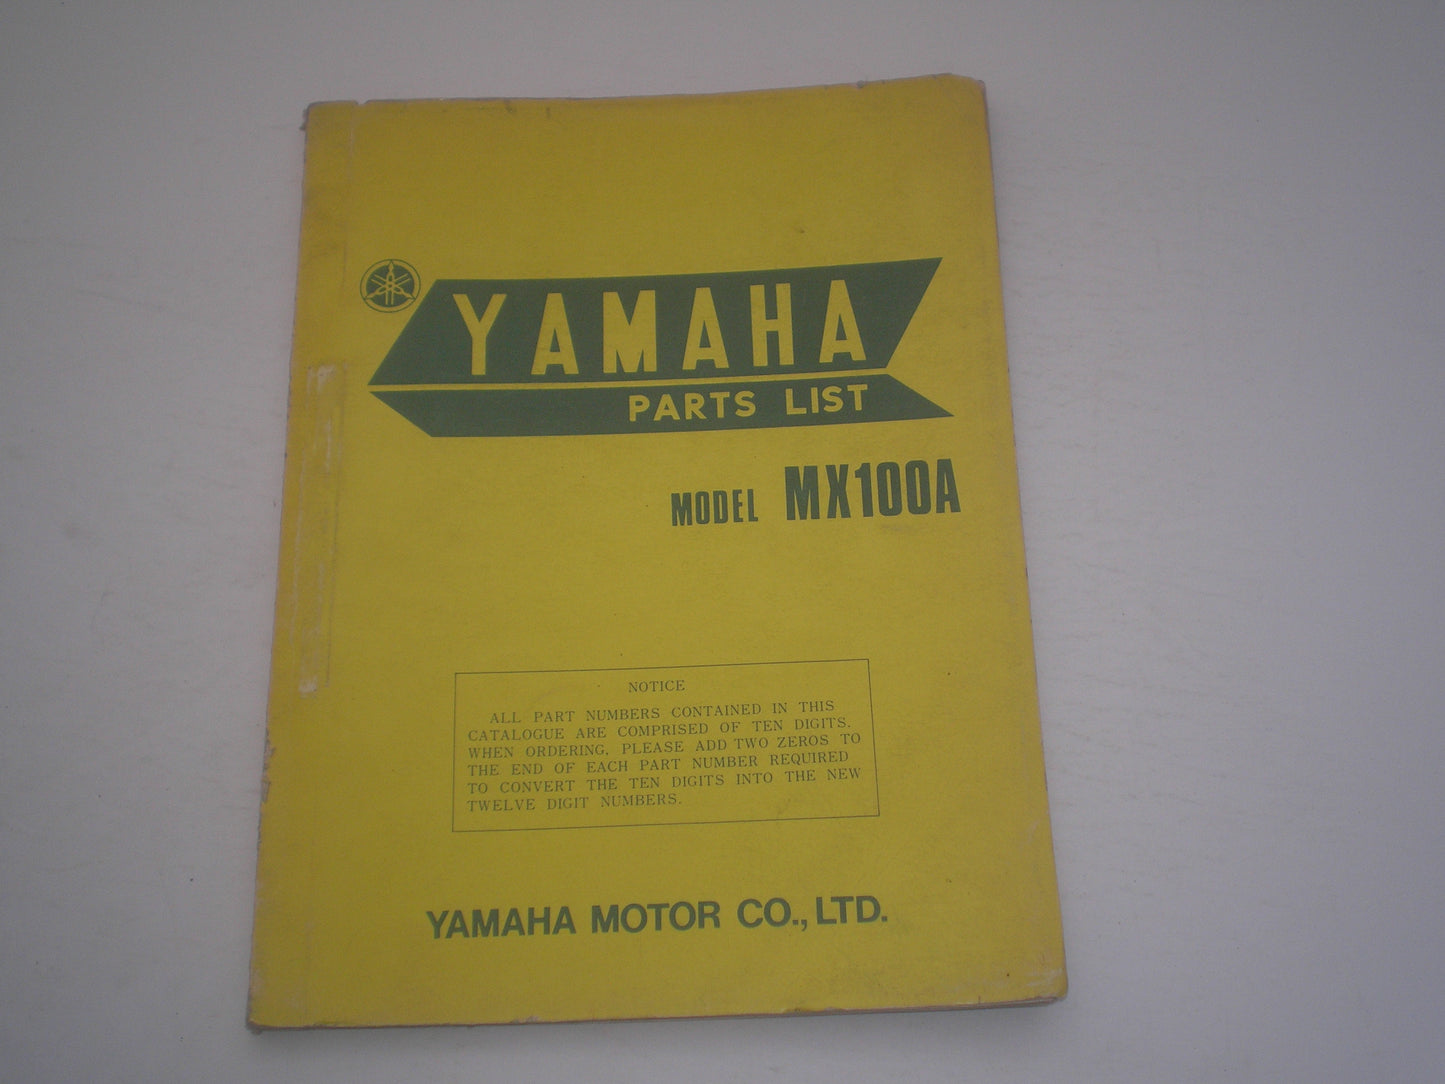 YAMAHA MX100 A  1974  Parts List / Catalogue  427-28198-60  LIT-10014-27-00  #1731